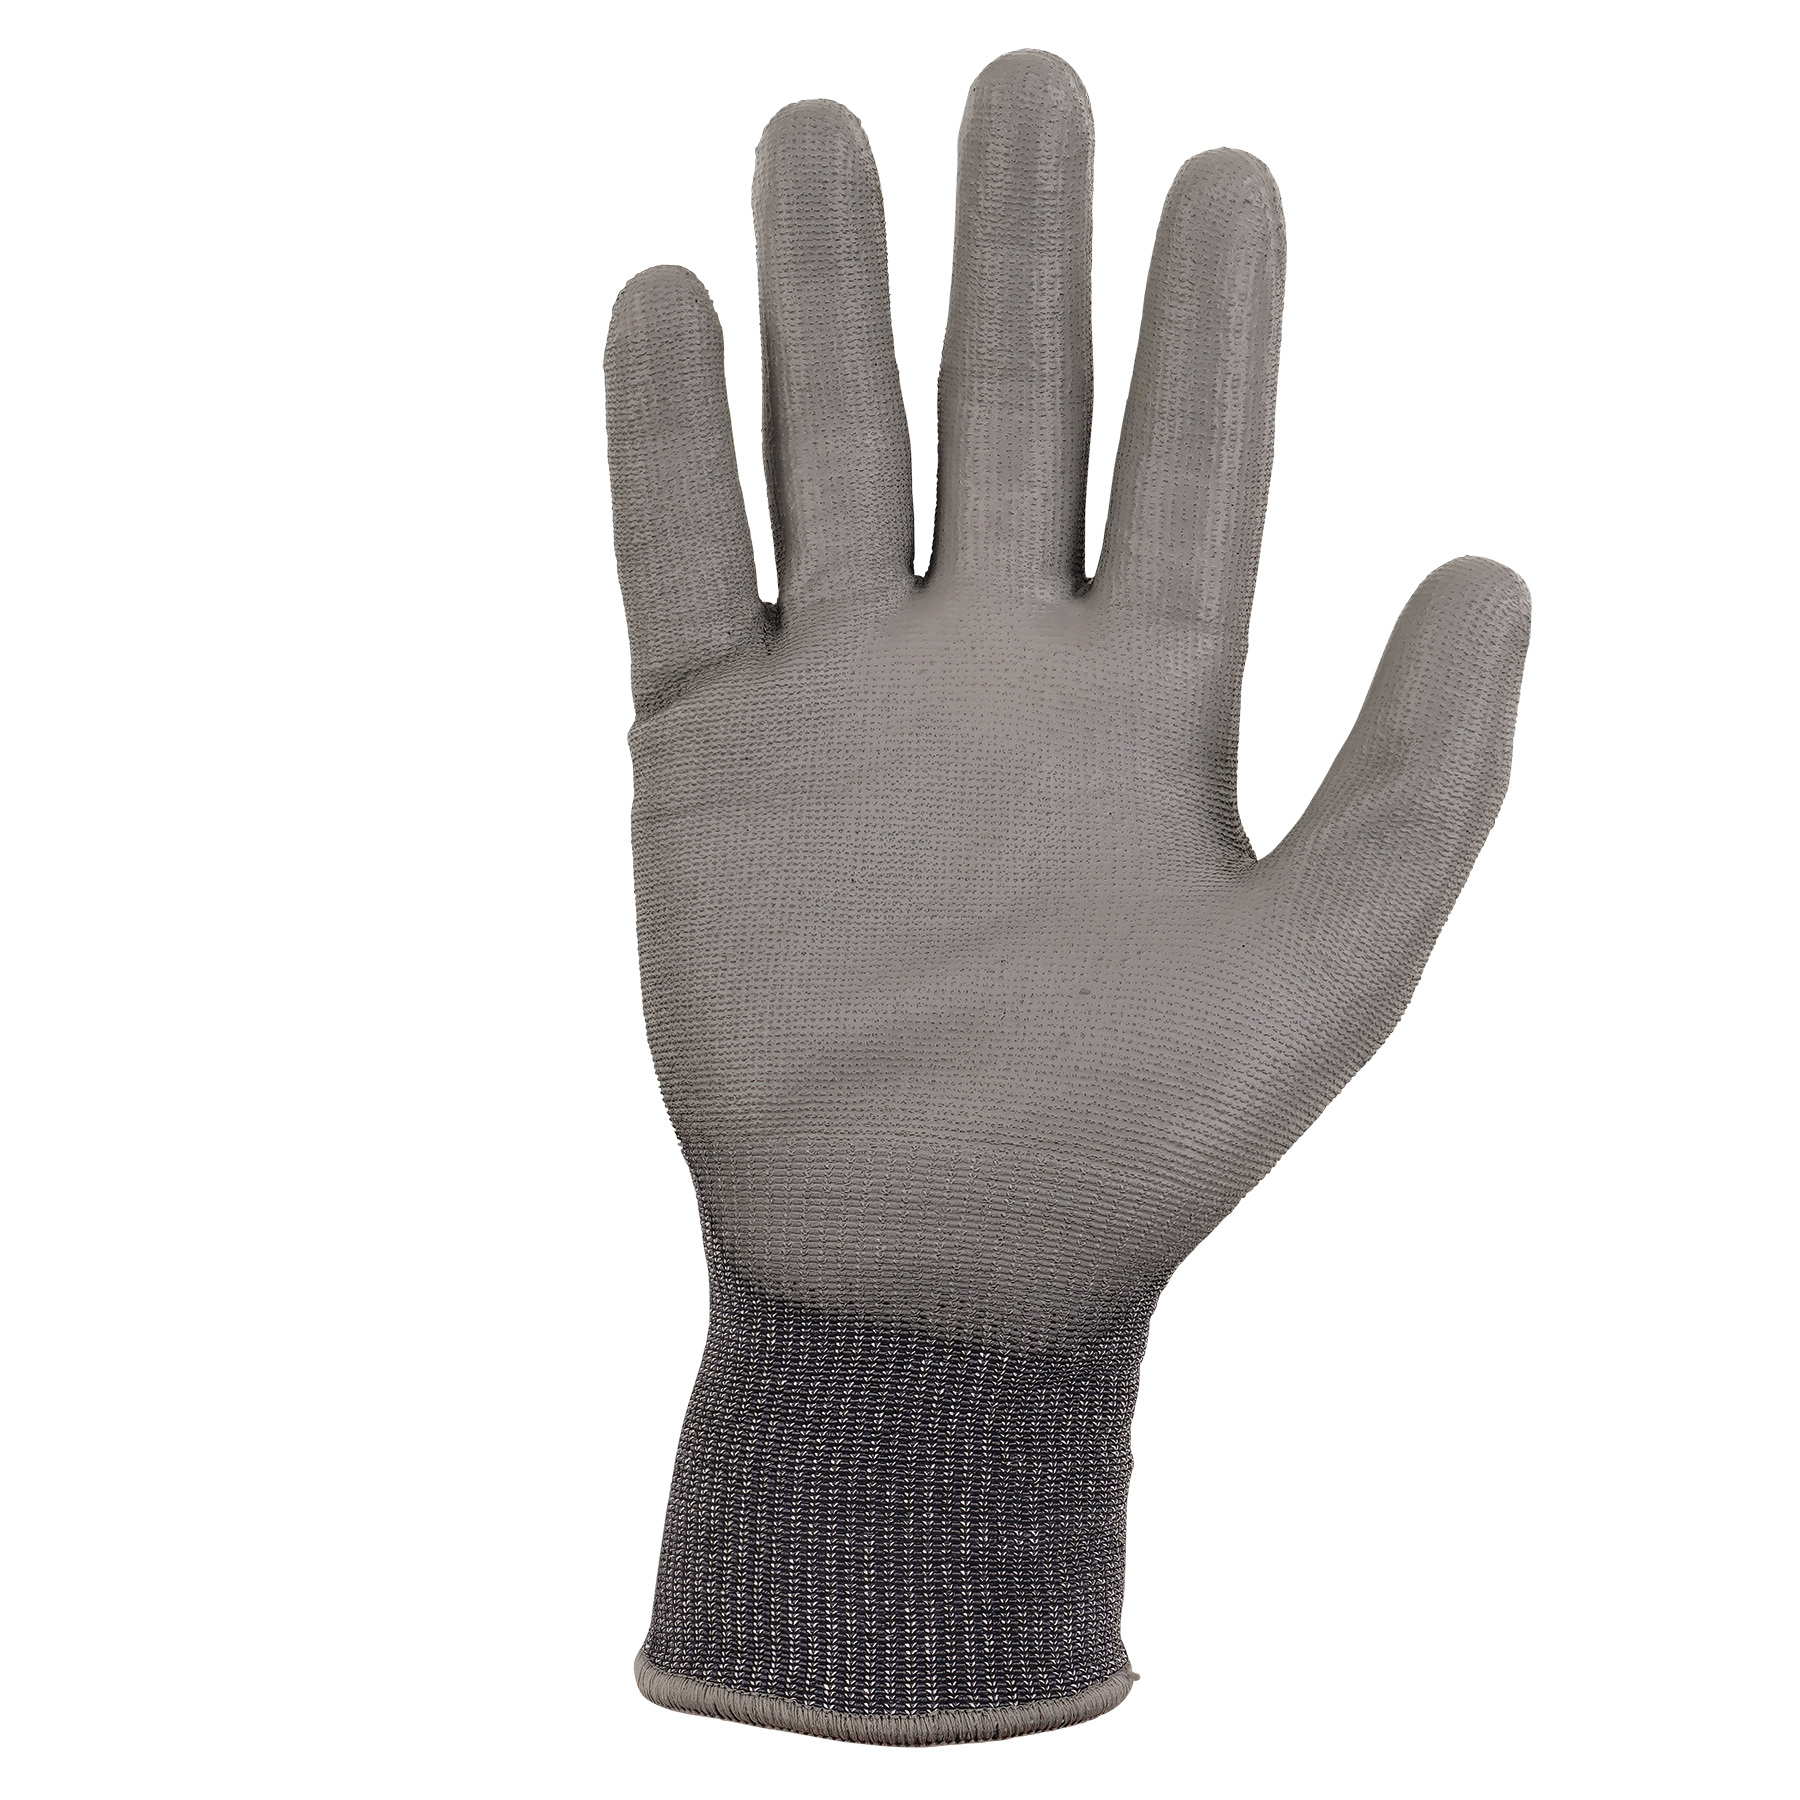 https://www.ergodyne.com/sites/default/files/product-images/10491-7044-ansi-a4-pu-coated-cr-gloves-grey-palm.jpg